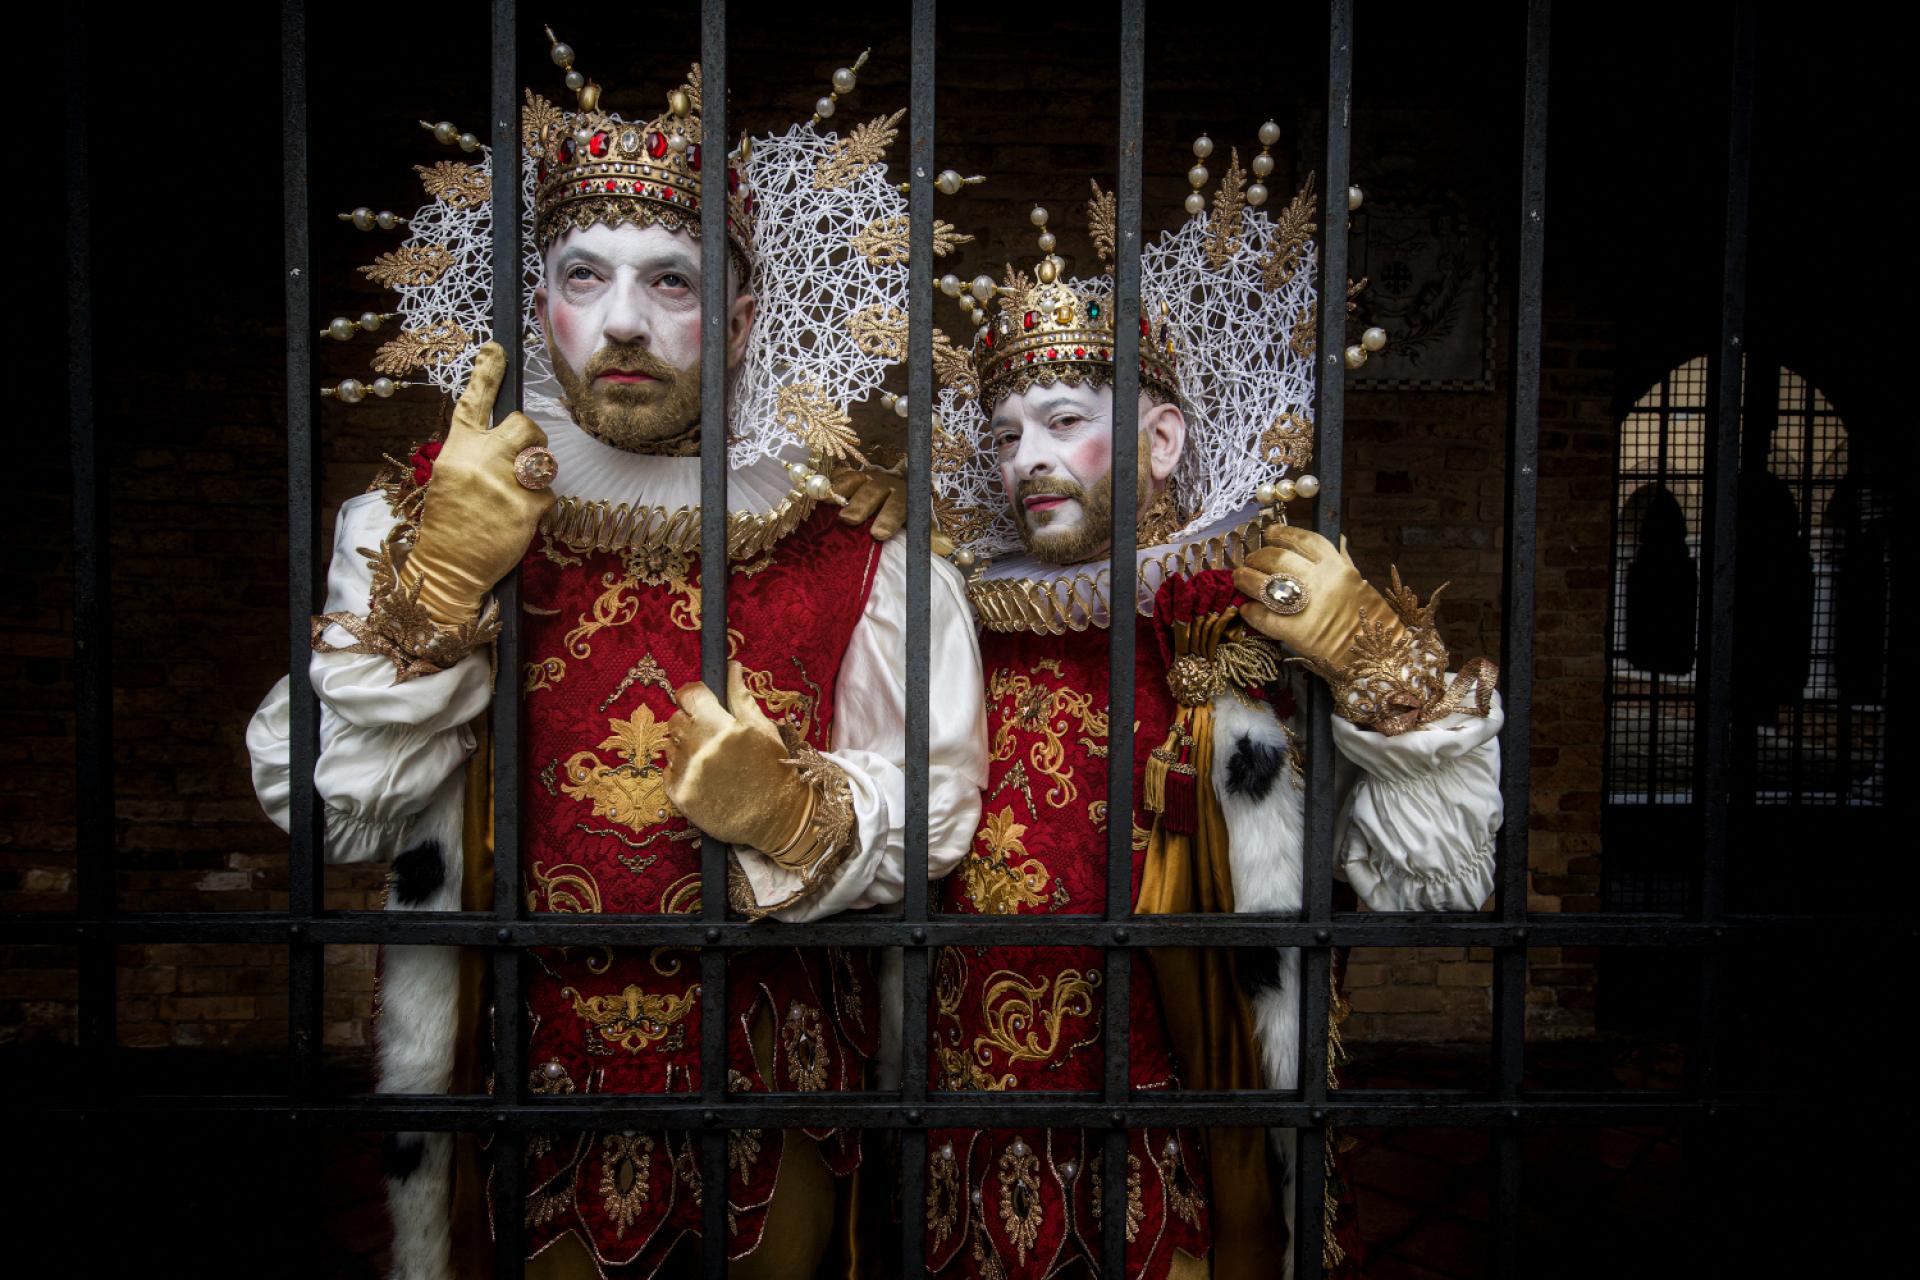 London Photography Awards Winner - The Venice Carnevale